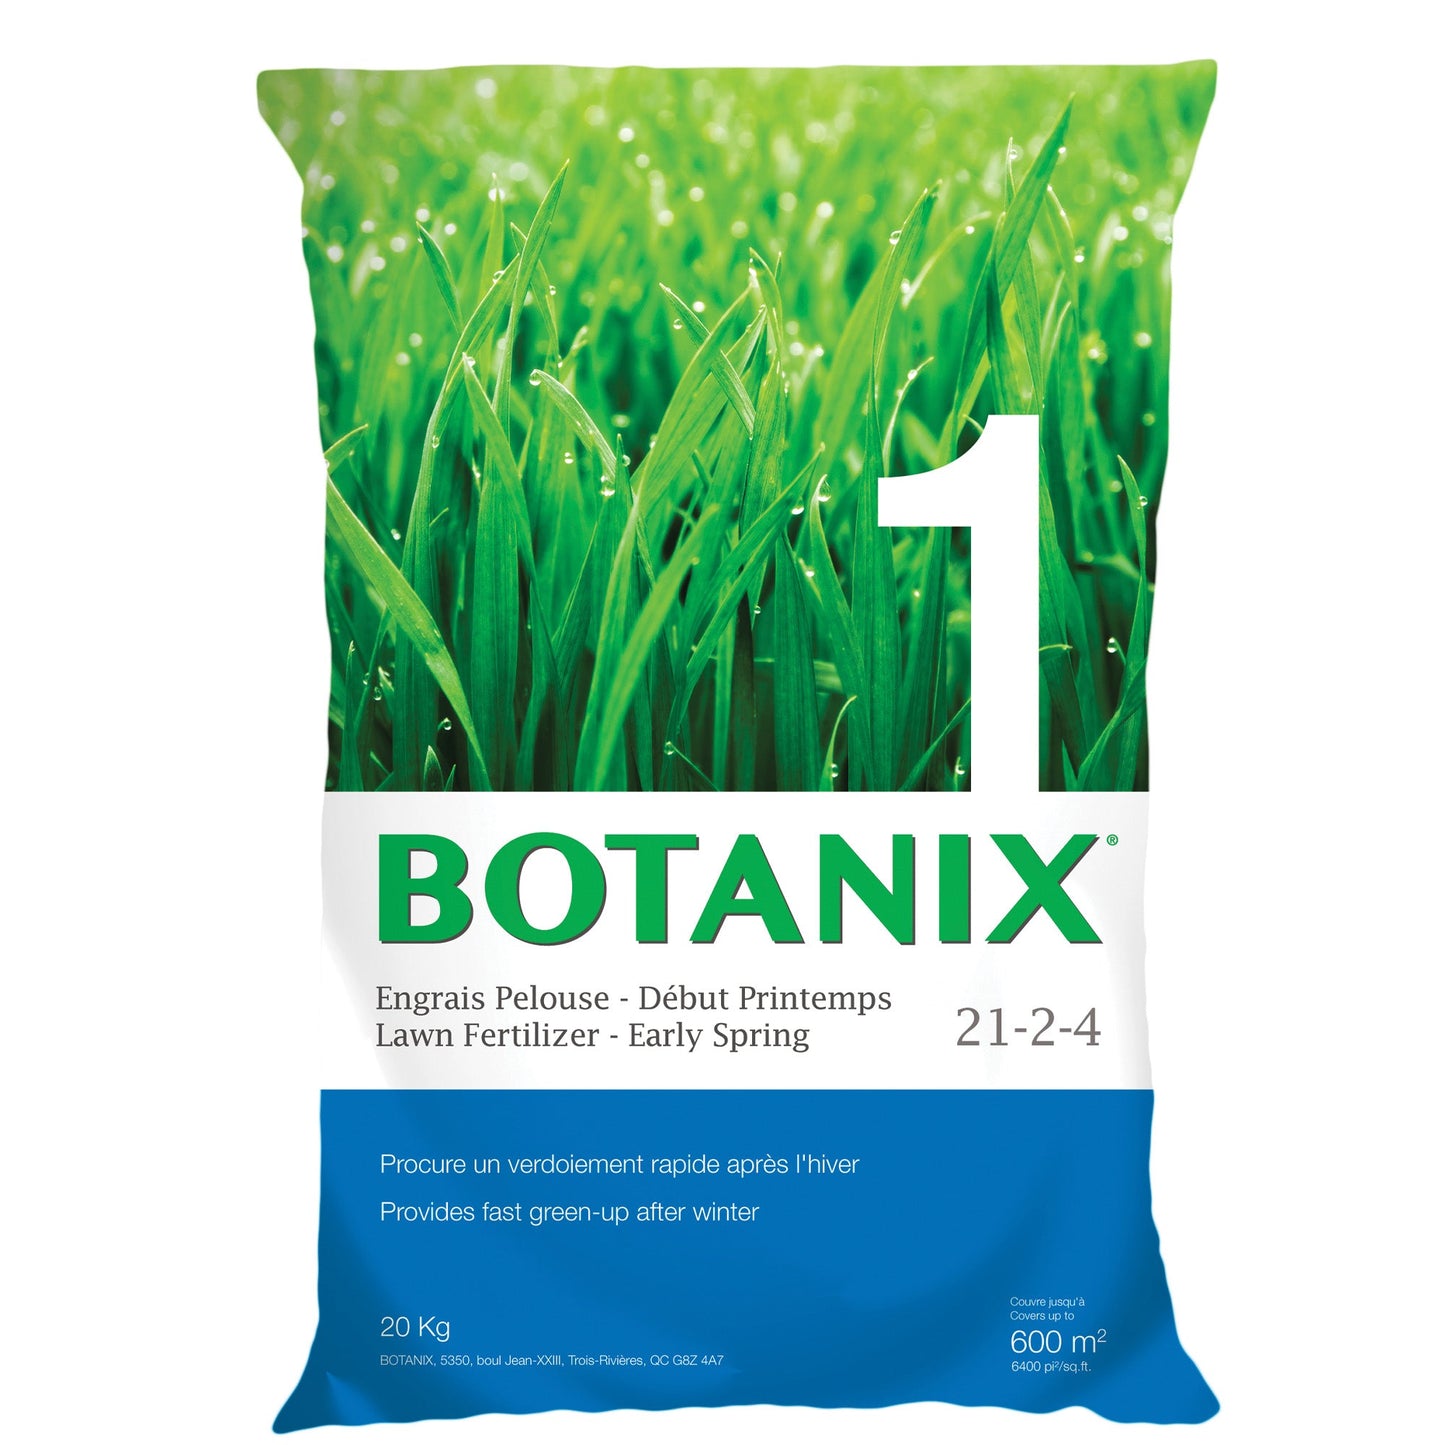 Lawn Fertilizer 4 Steps - Step #1 - Botanix